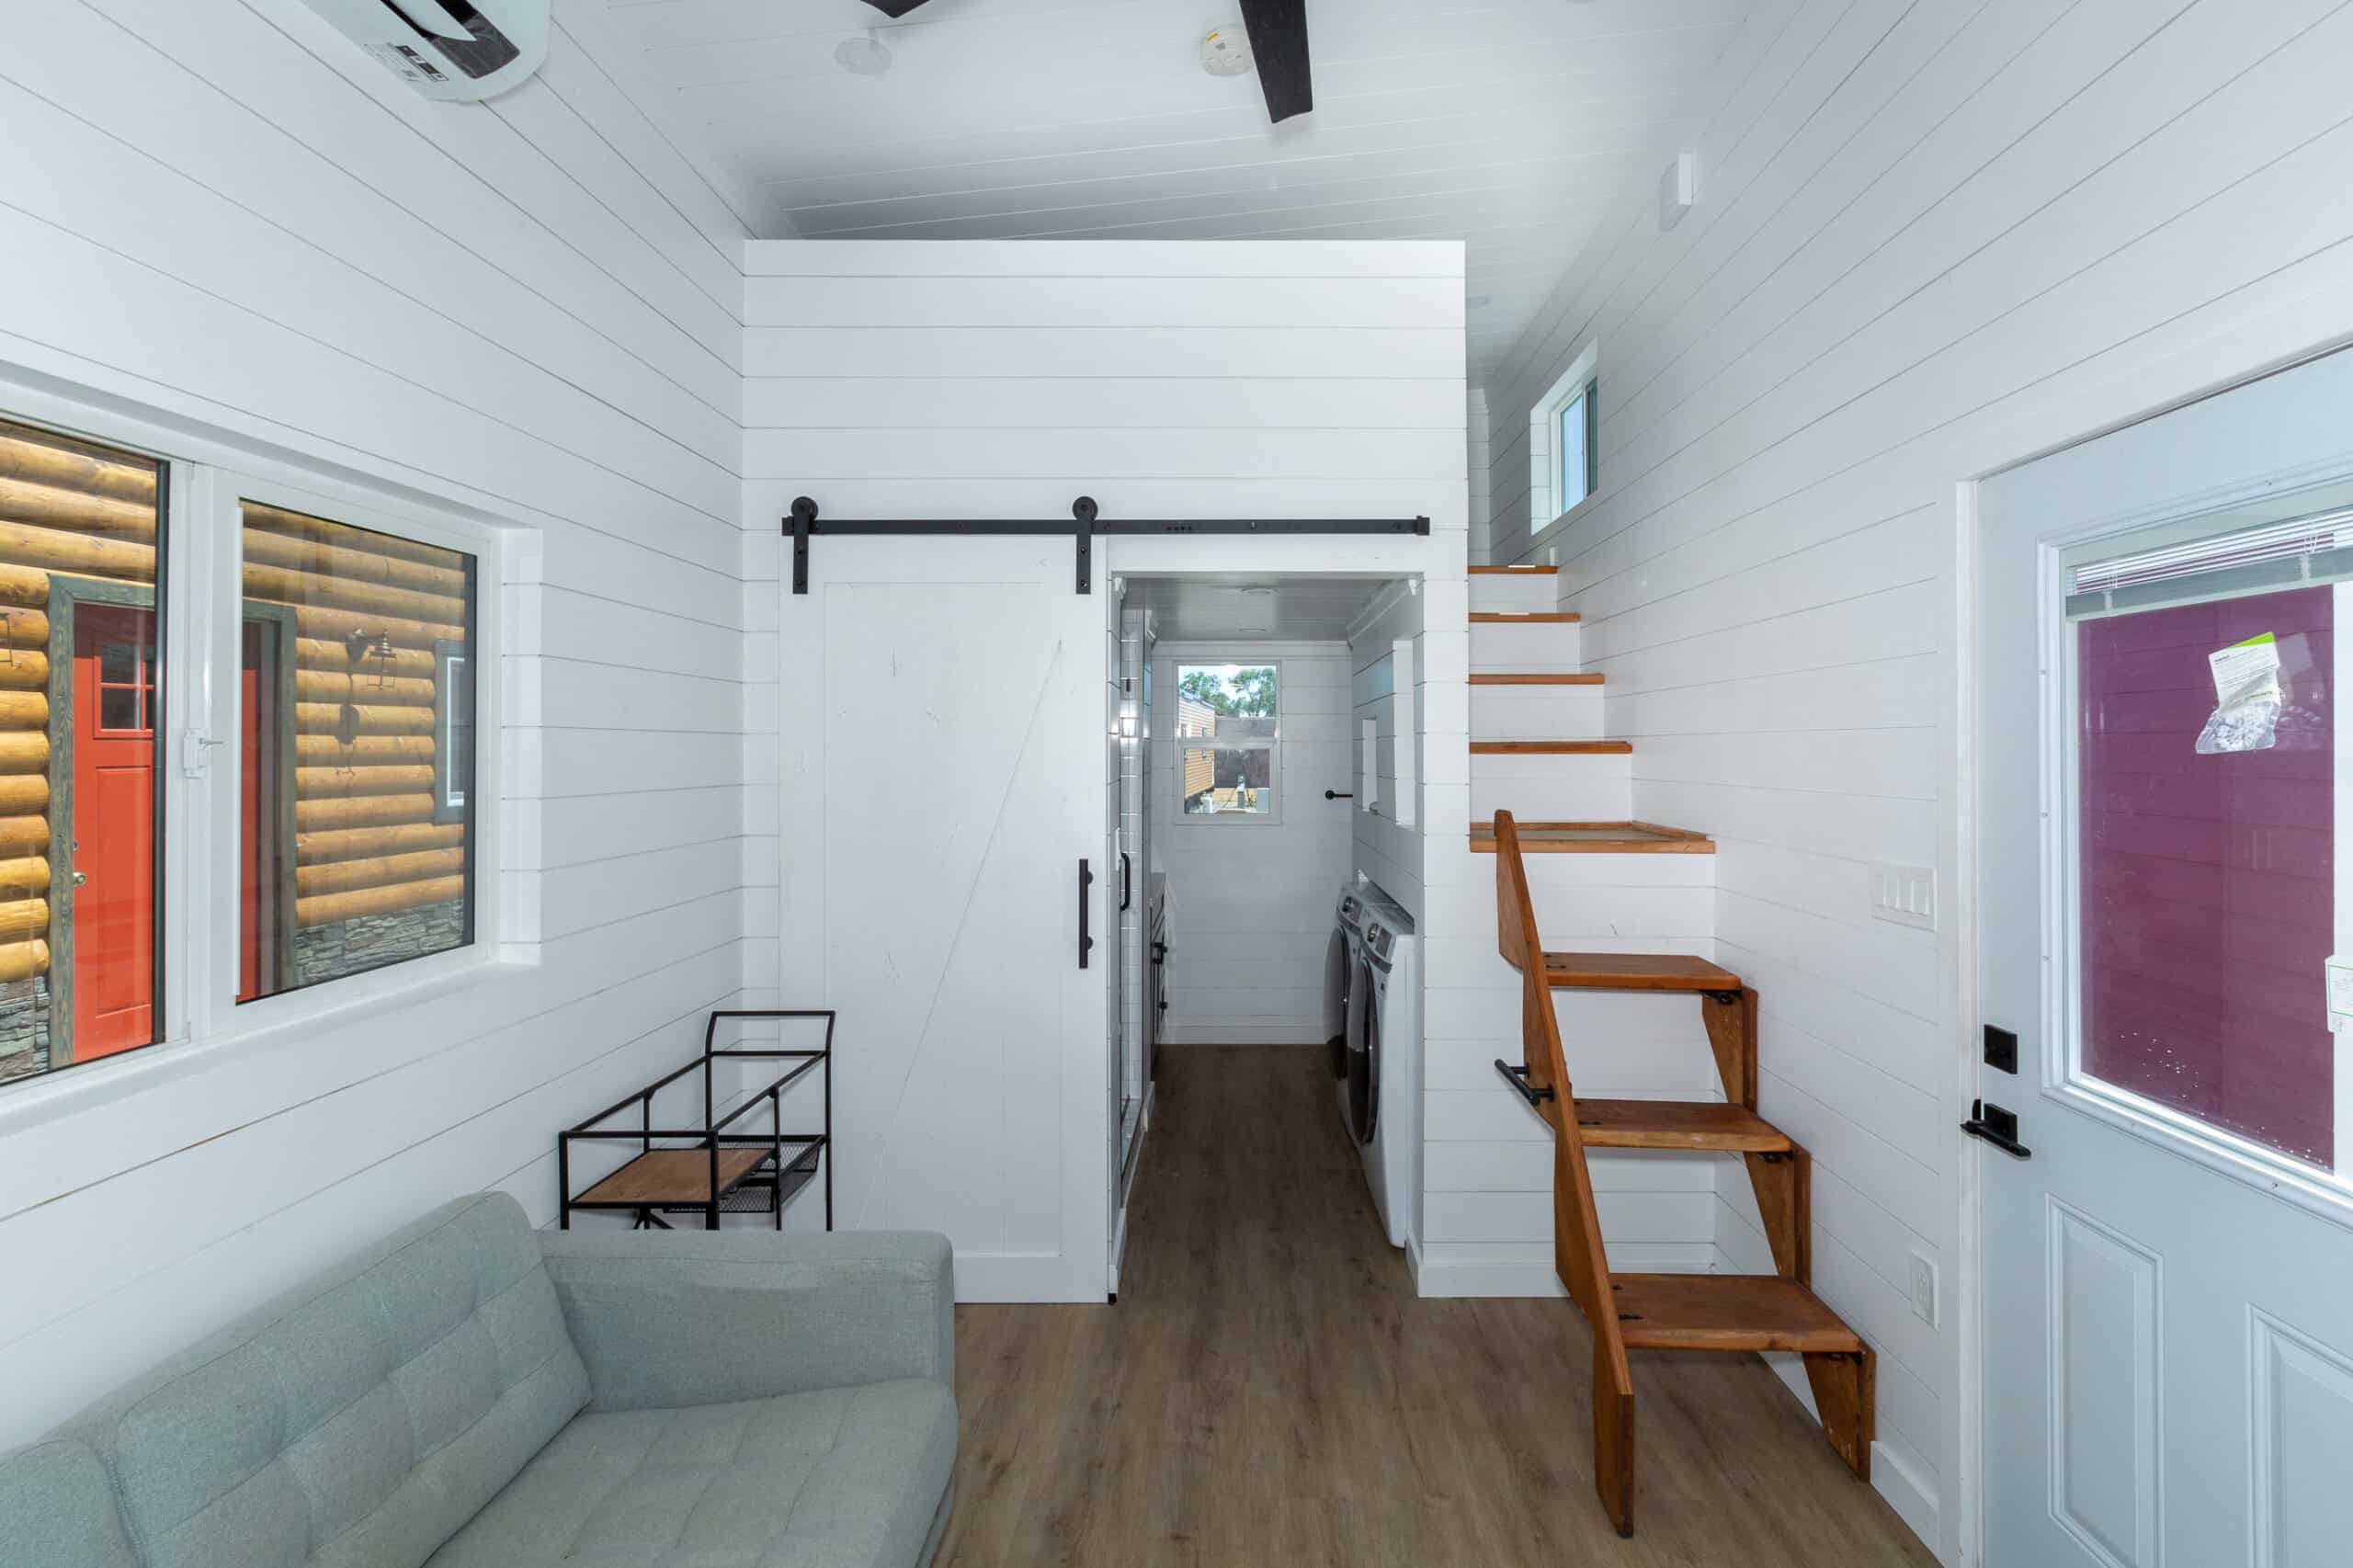 6 Spectacular Tiny Home Interior Design Models You'll Love